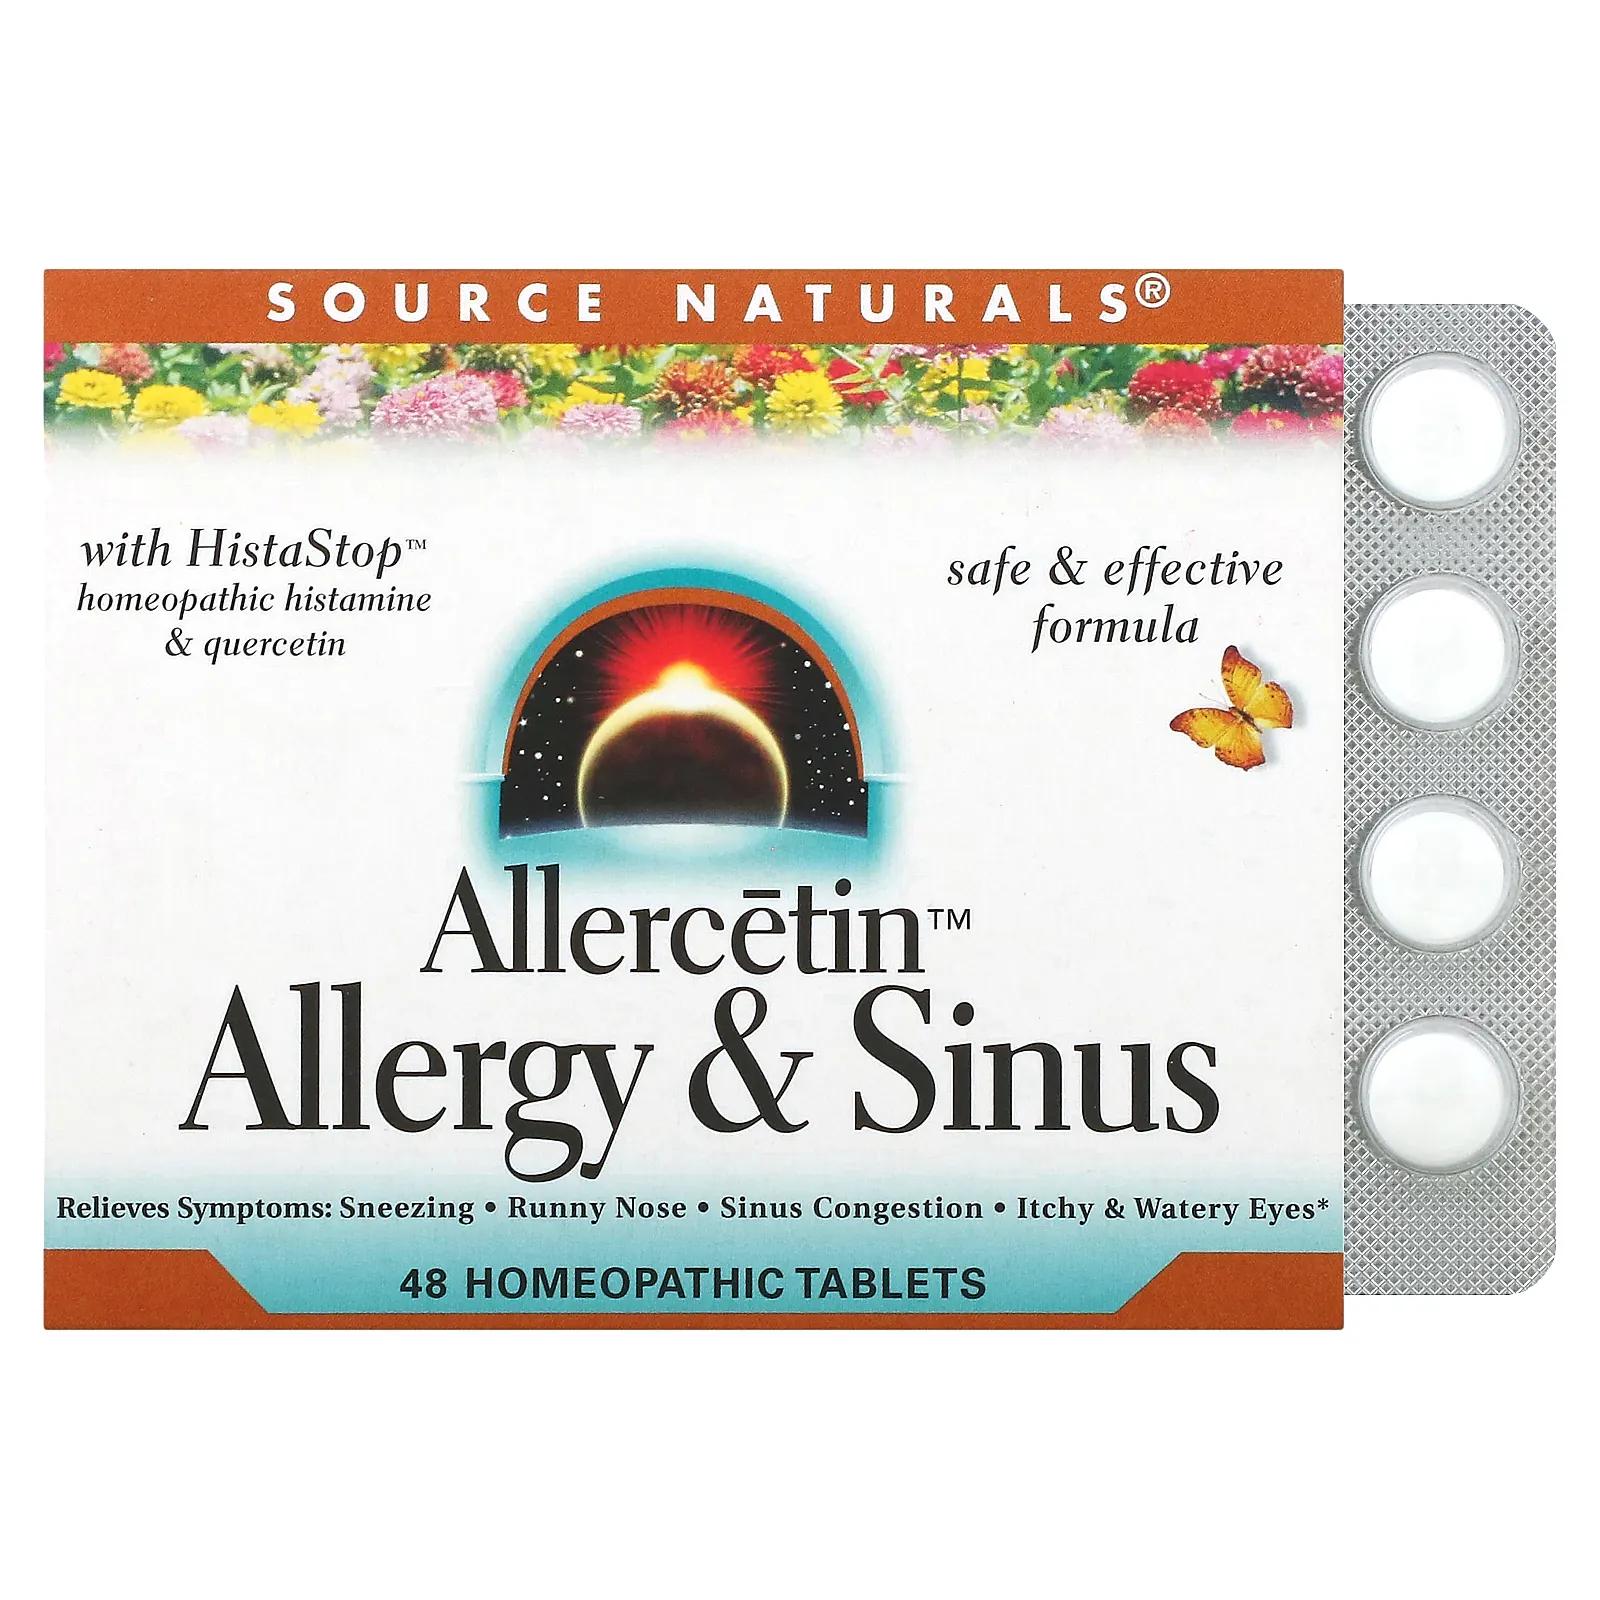 Source Naturals Allercetin Средство от аллергии и заложенности носа 48 гомеопатических таблеток source naturals allercetin средство от аллергии и заложенности носа 48 таблеток